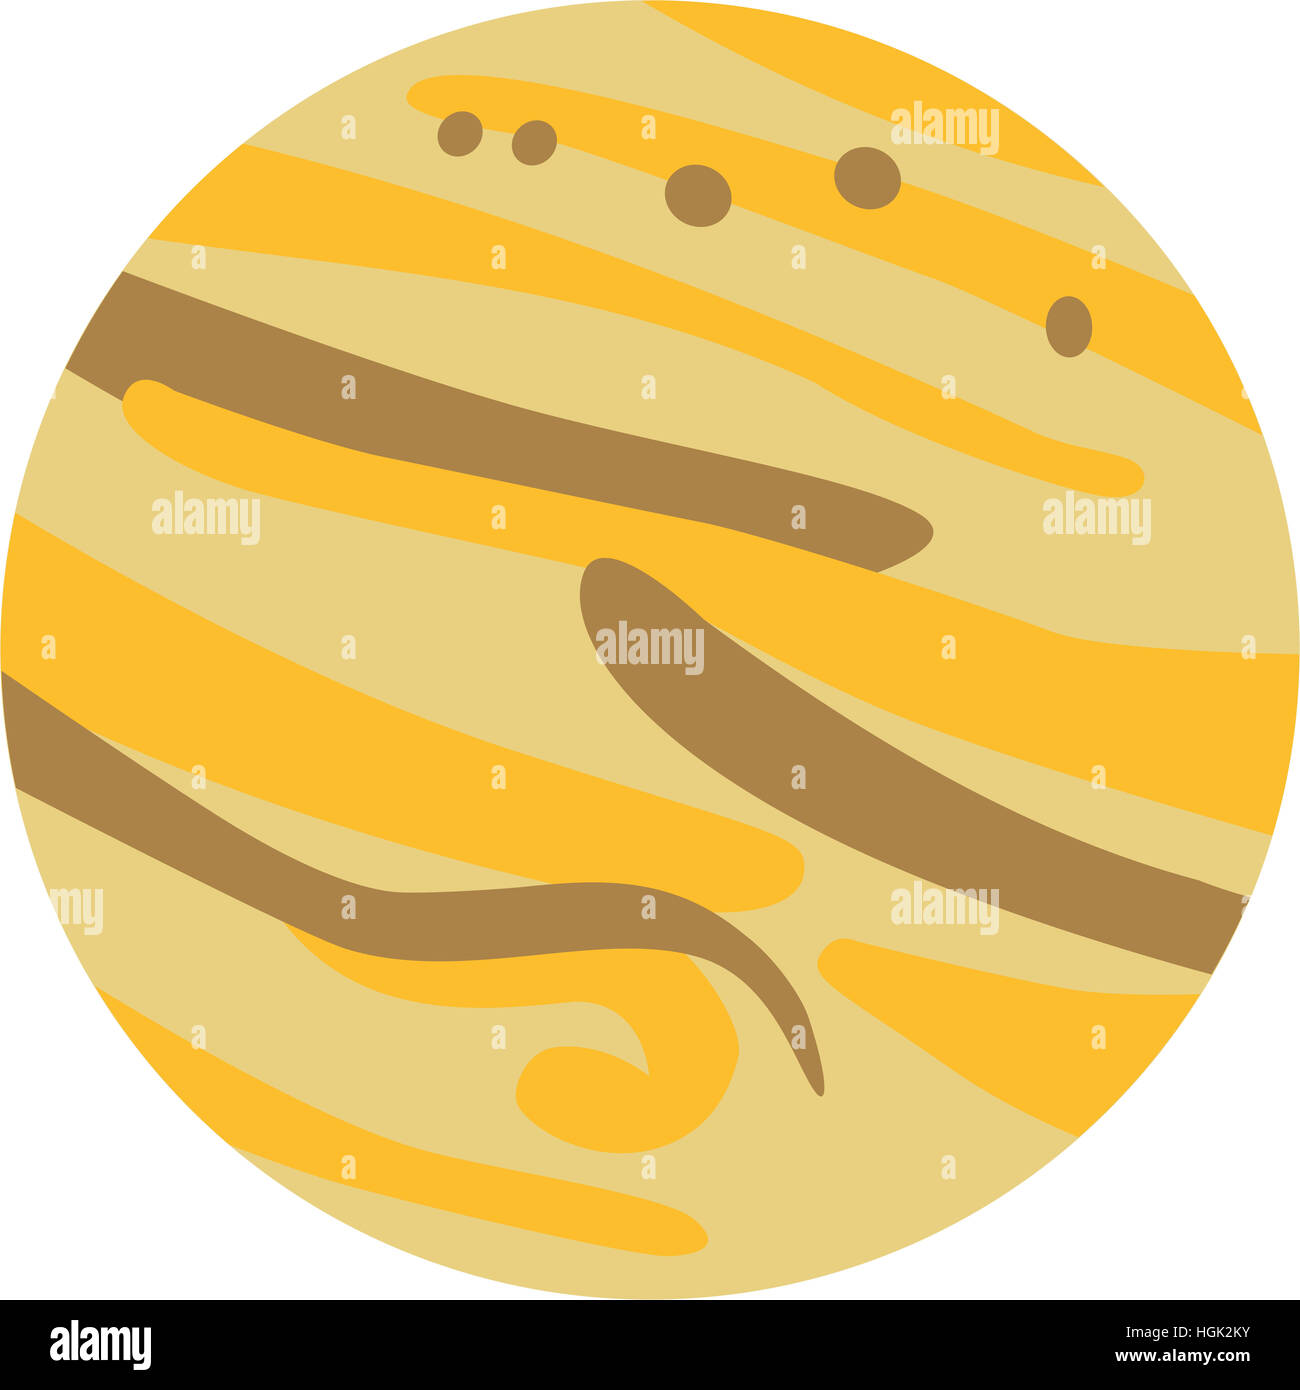 Jupiter planet symbol Stock Photo